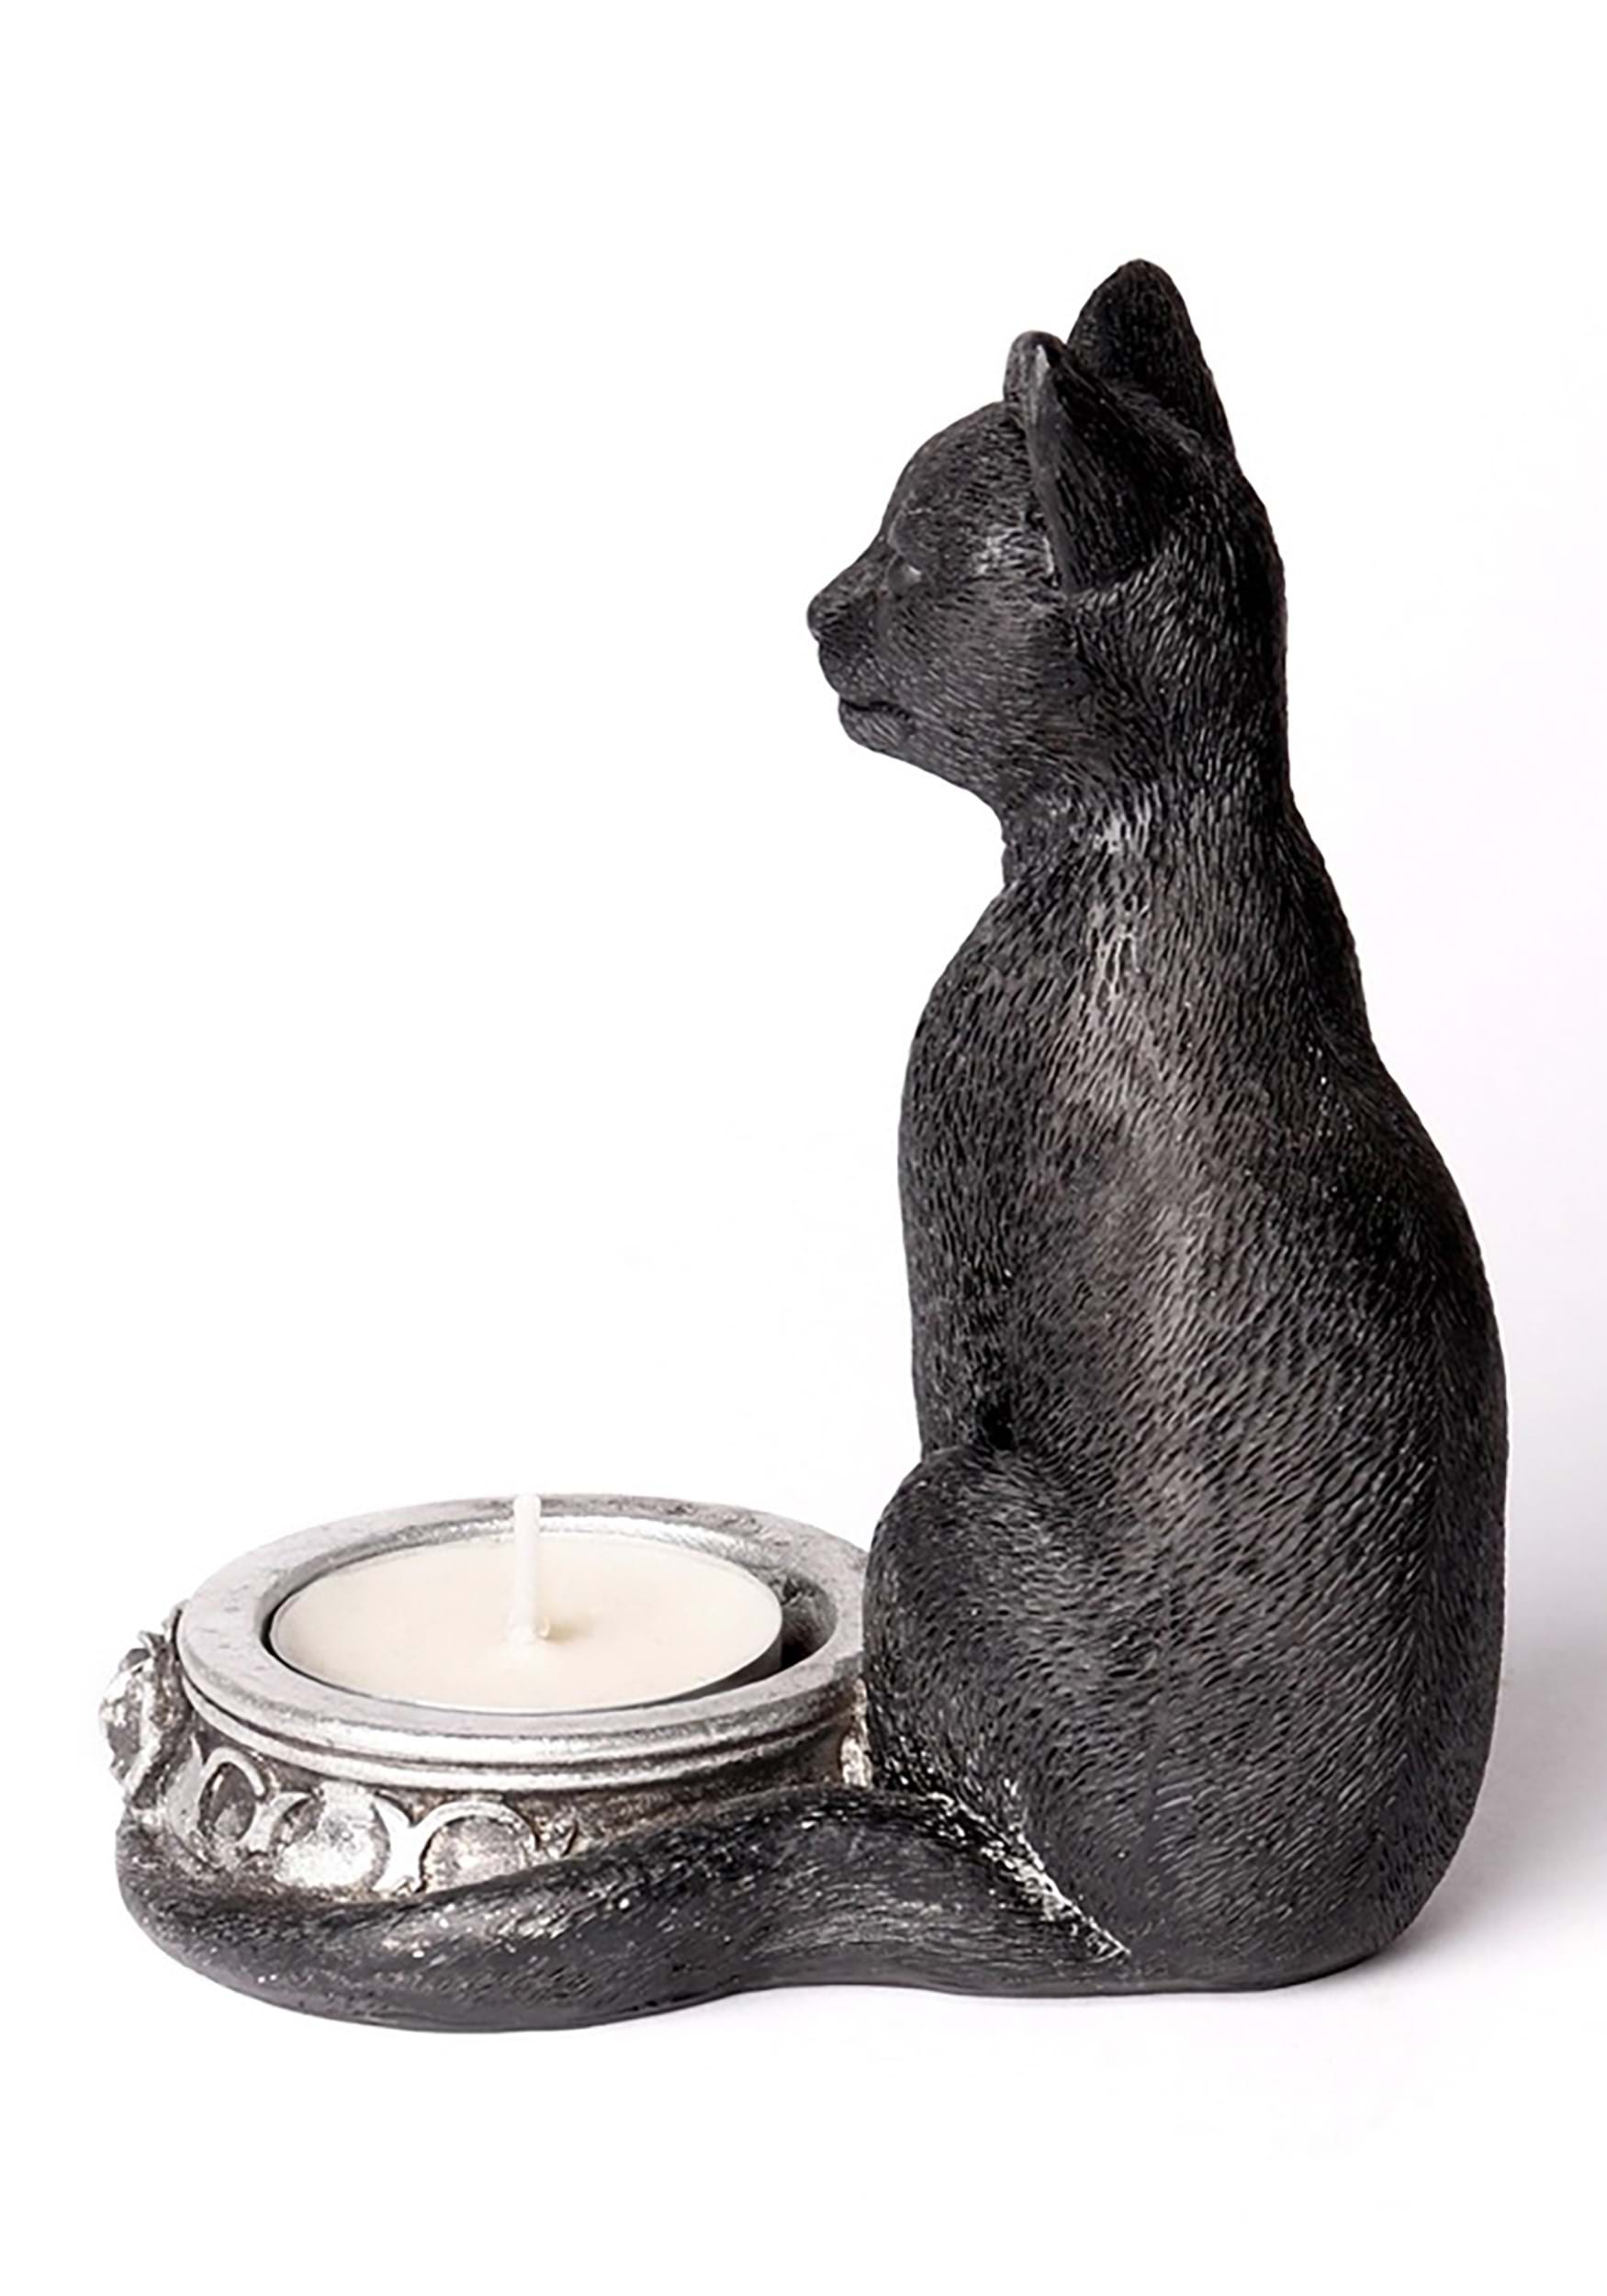 Black Cat Tea Light Candle Holder